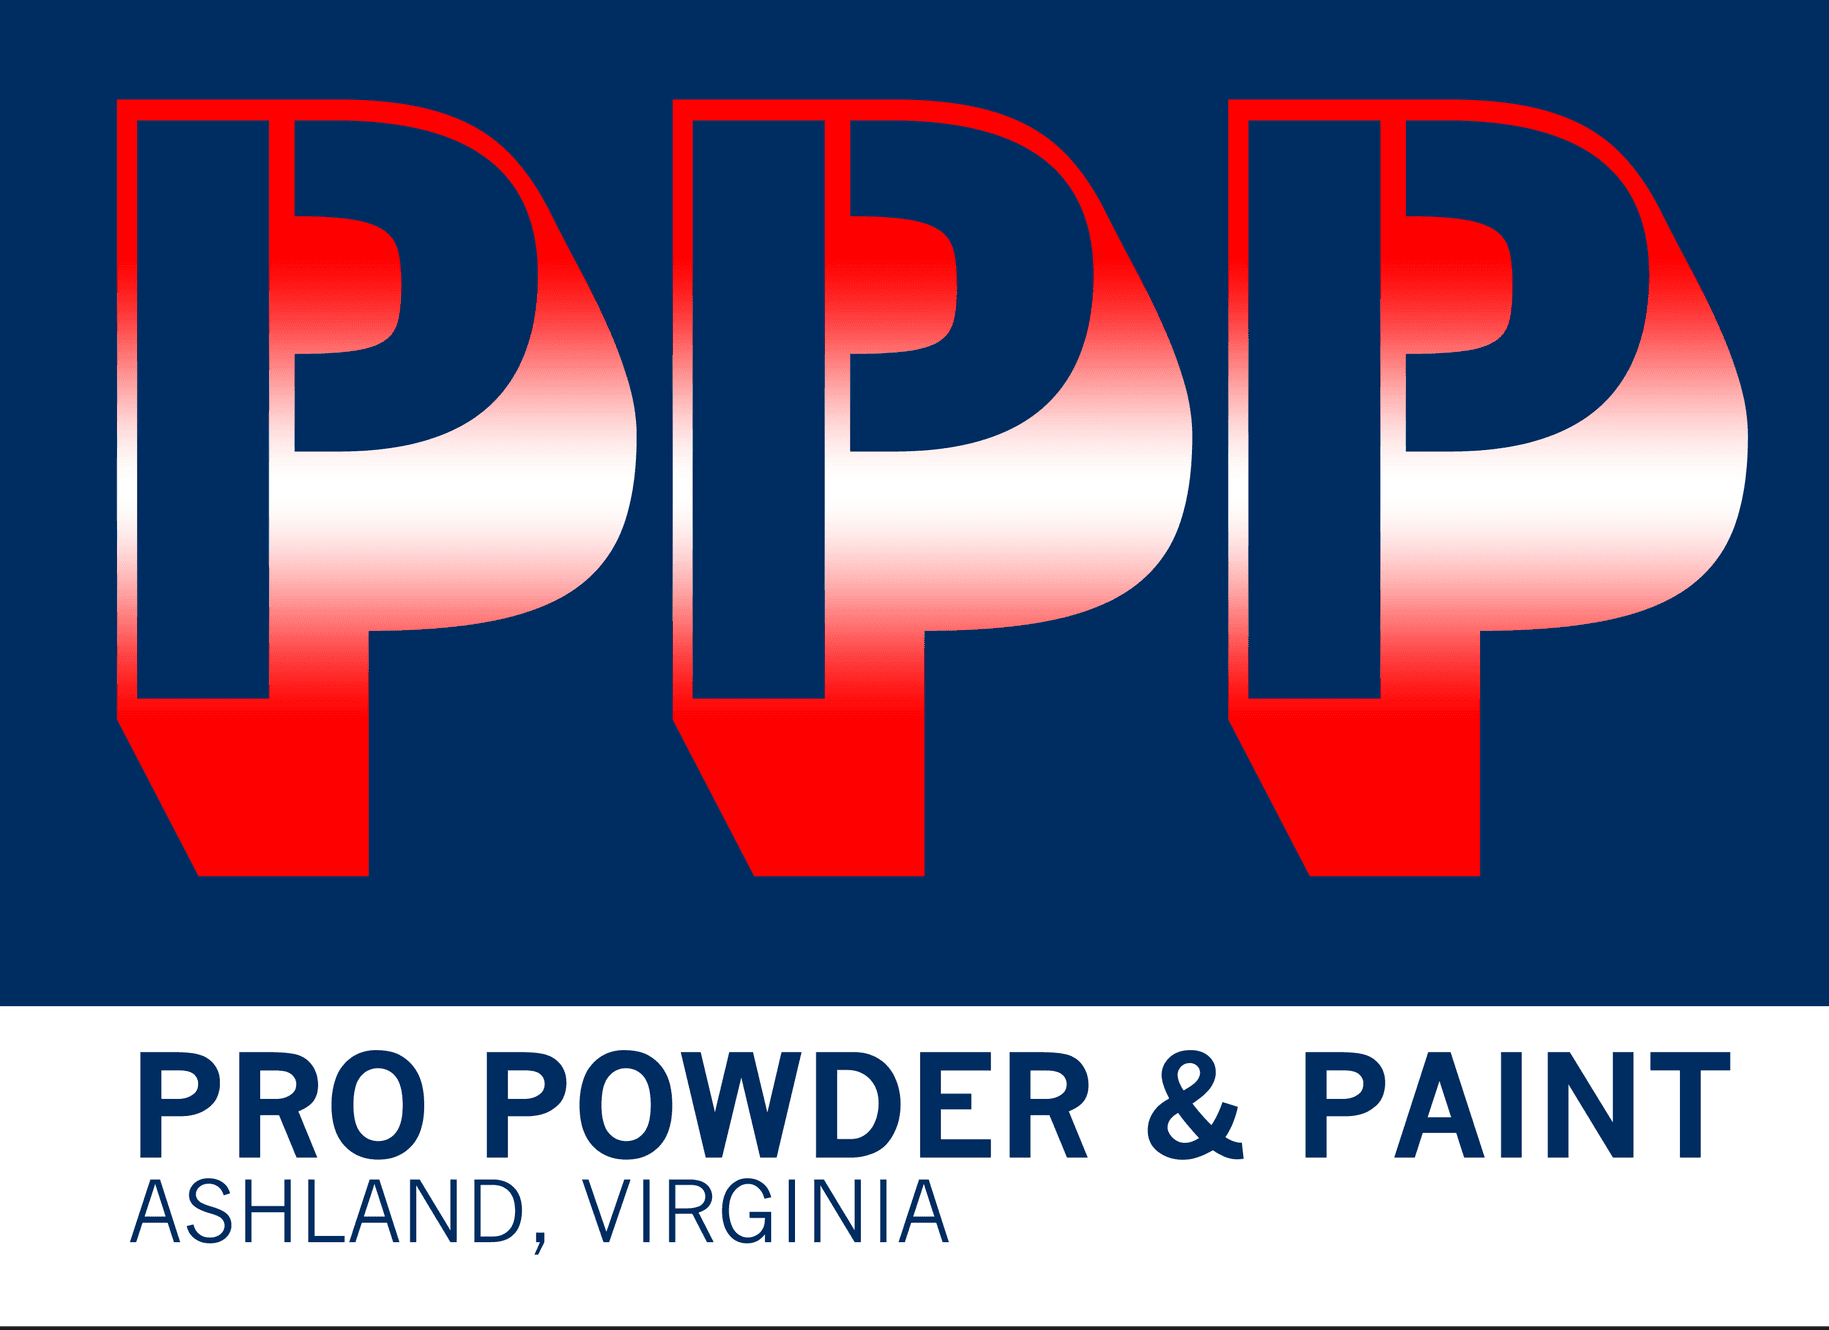 Product Pro Powder Paint | Services image